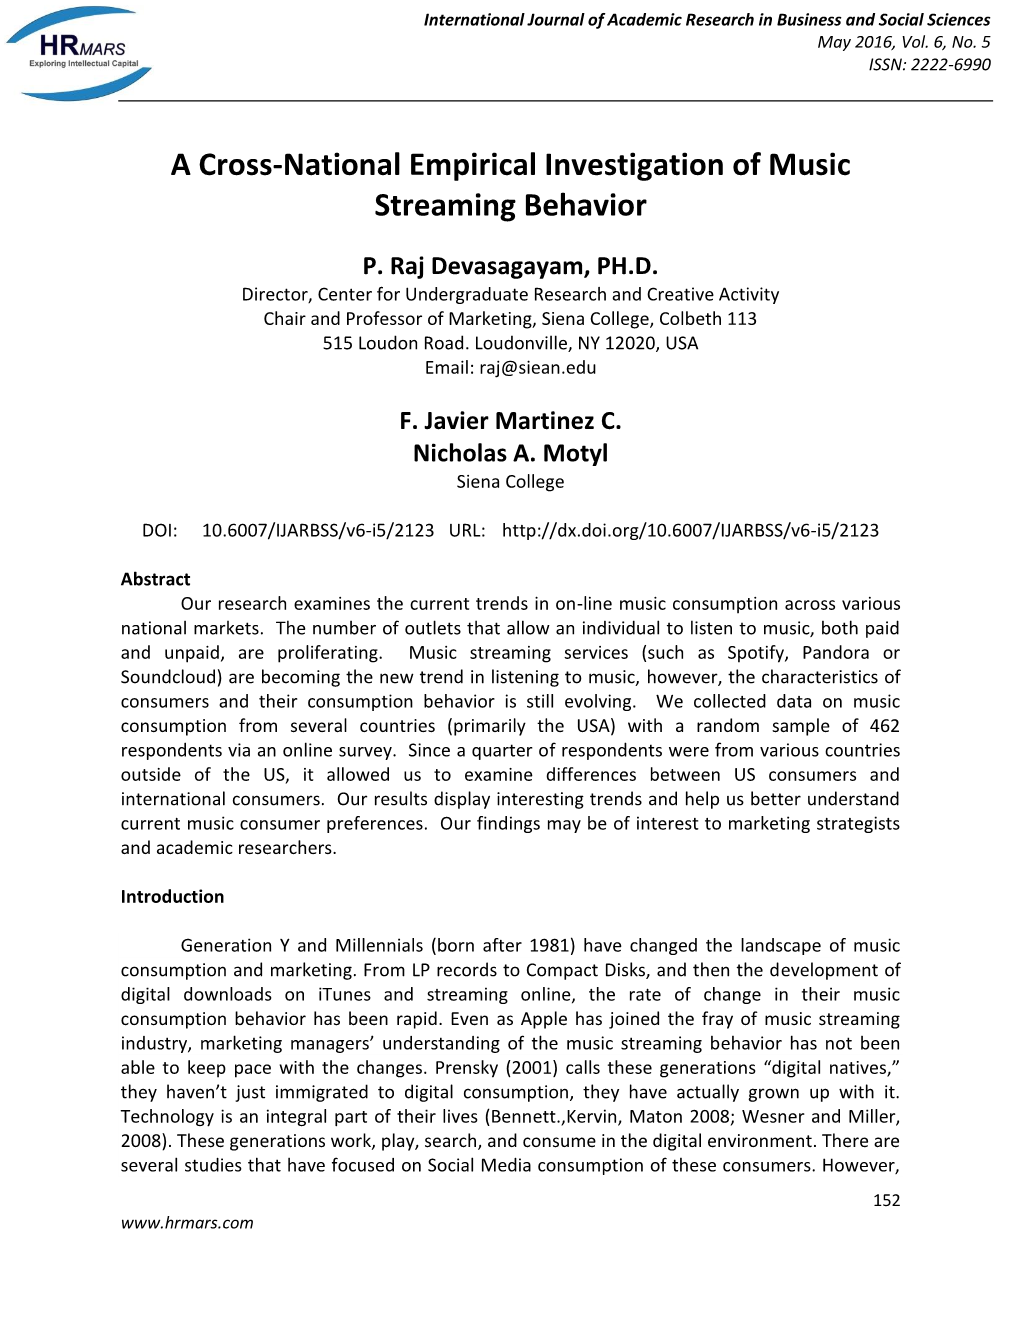 A Cross-National Empirical Investigation of Music Streaming Behavior